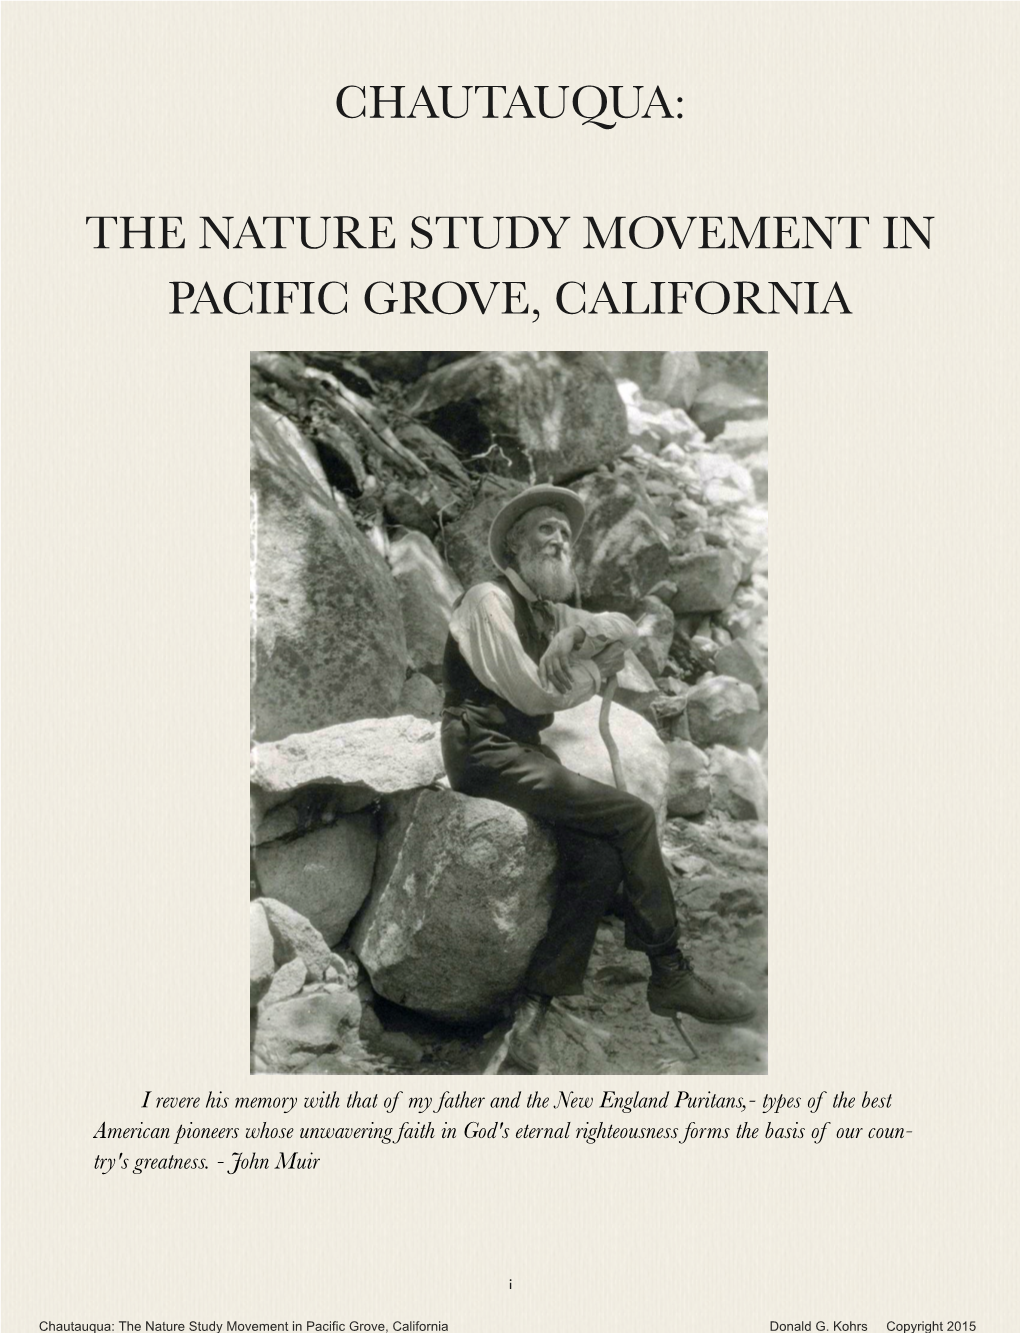 The Nature Study Movement in Pacific Grove, California